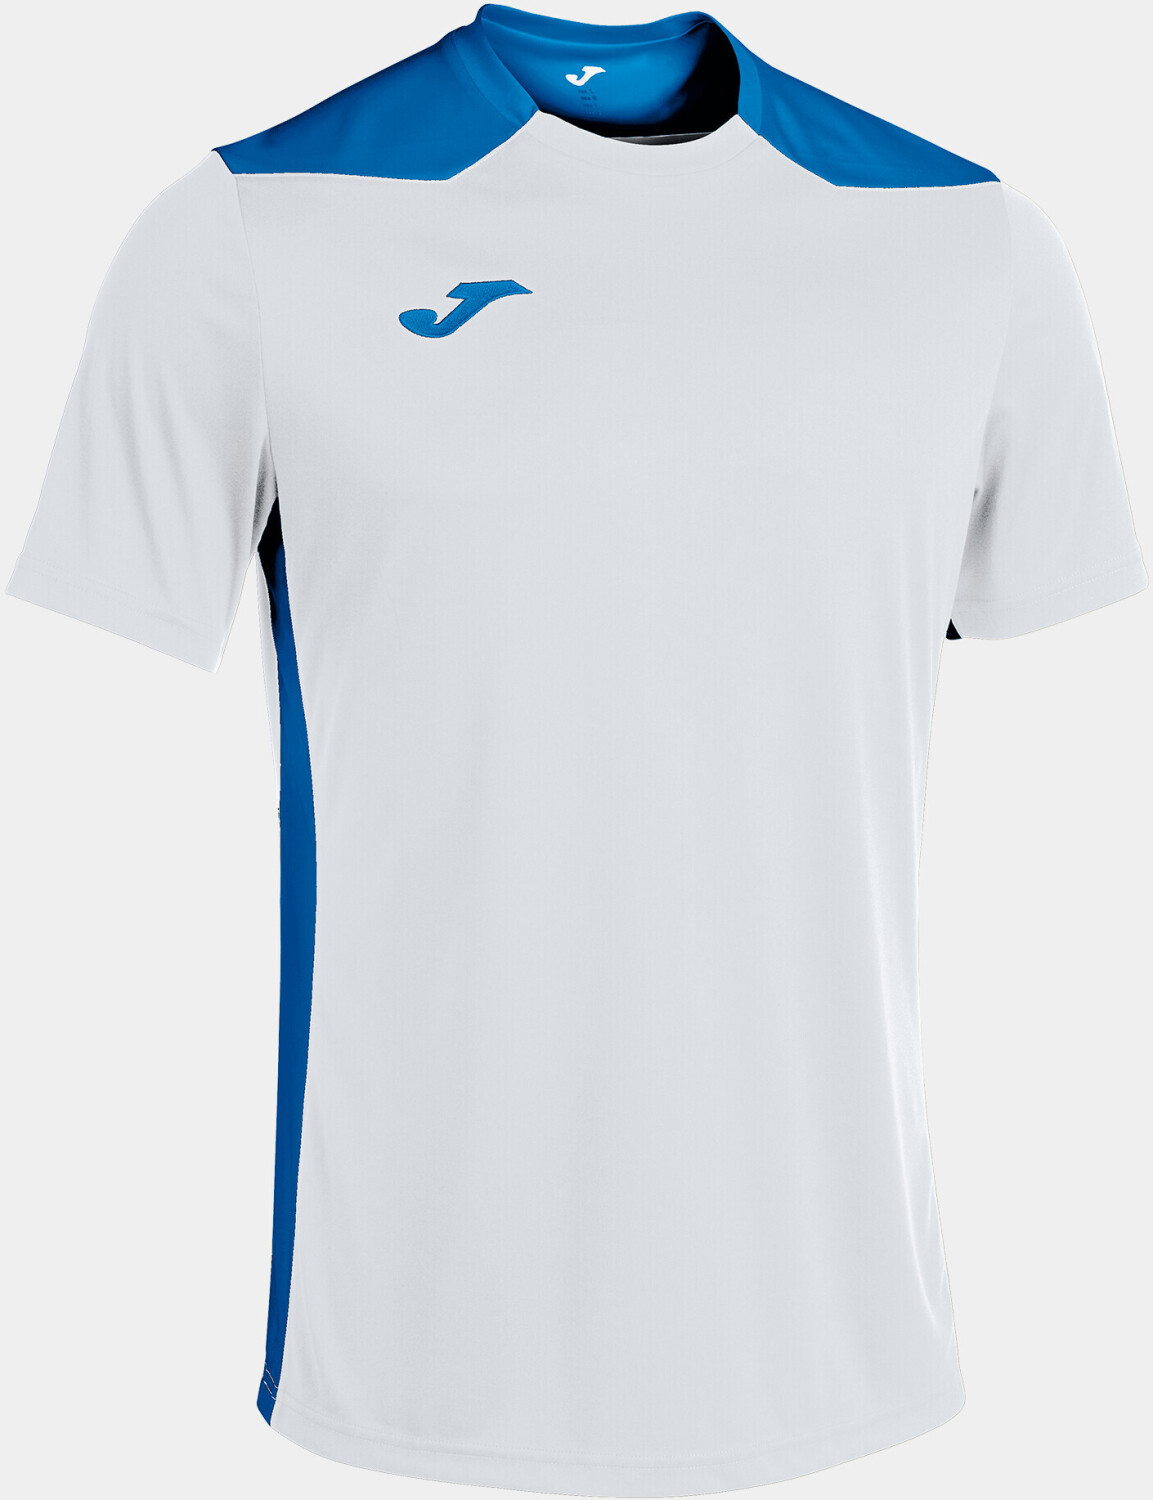 Photos - Football Kit Joma Championship VI Shirt Youth  white/royal blue (101822k)